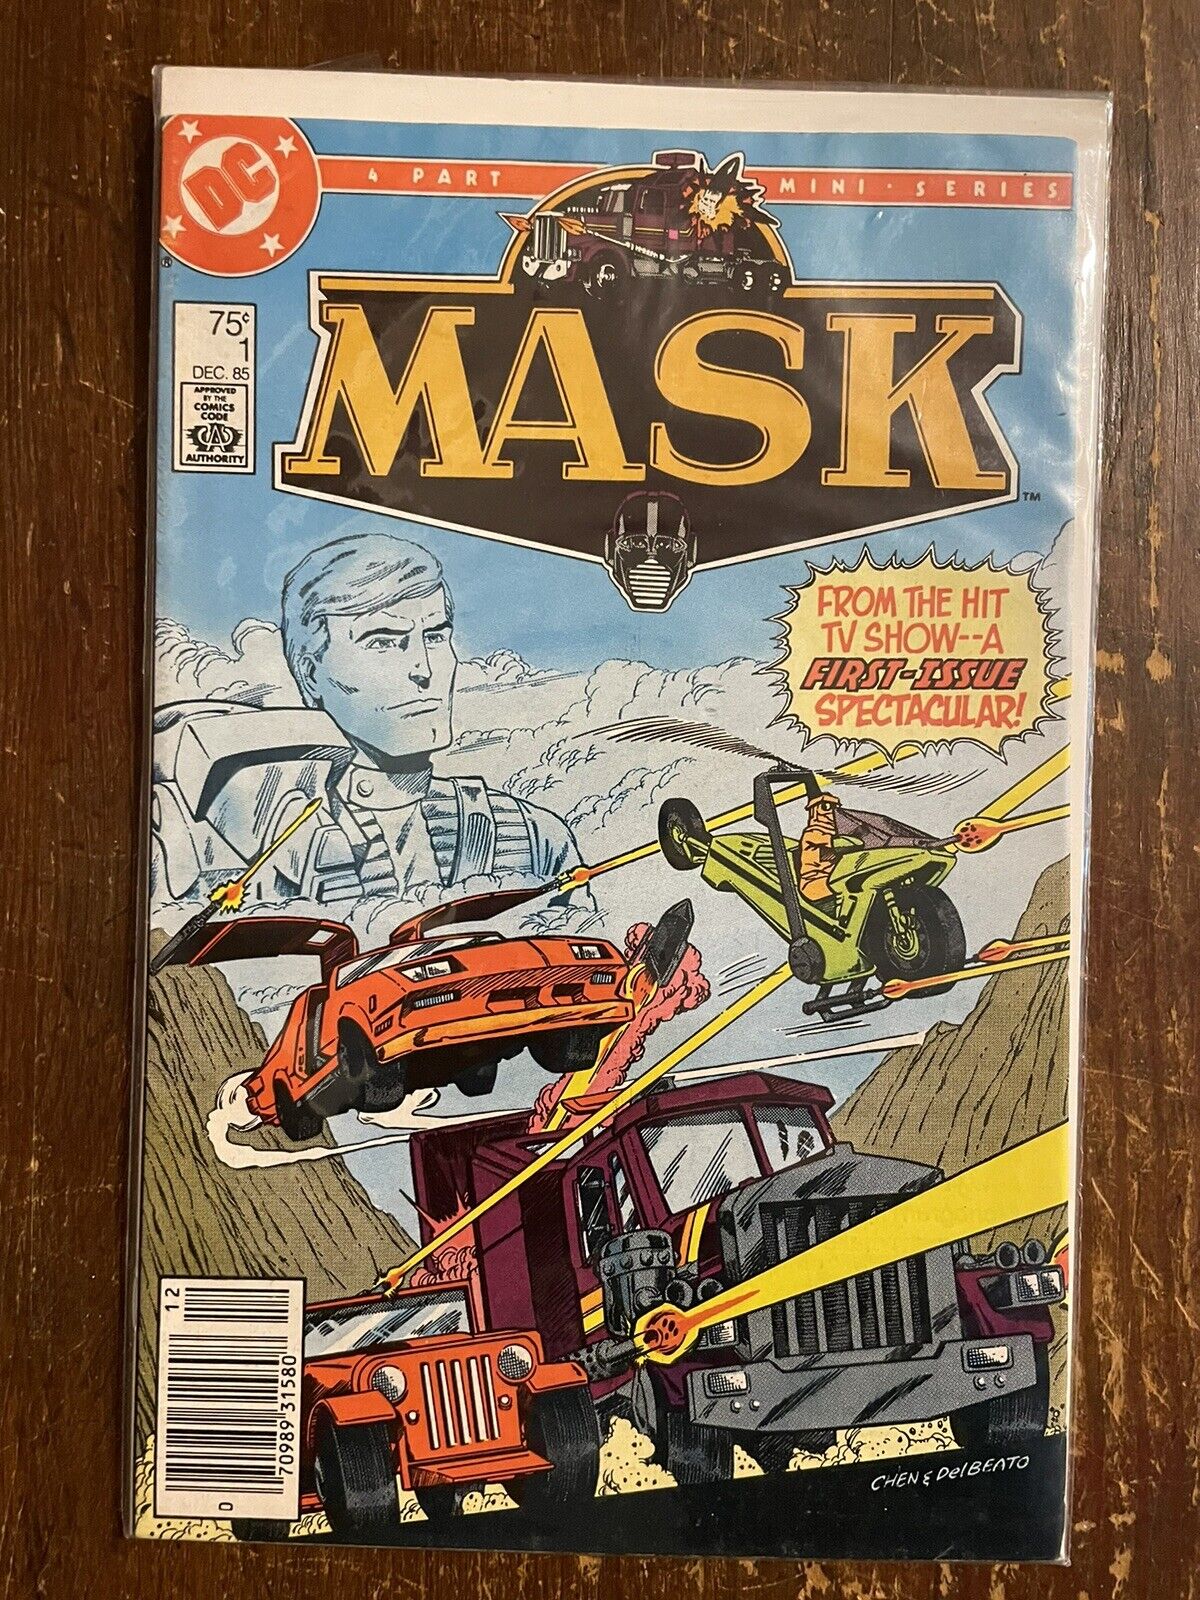 DC Comics Mask 1 December 1985 Limited Mini Series